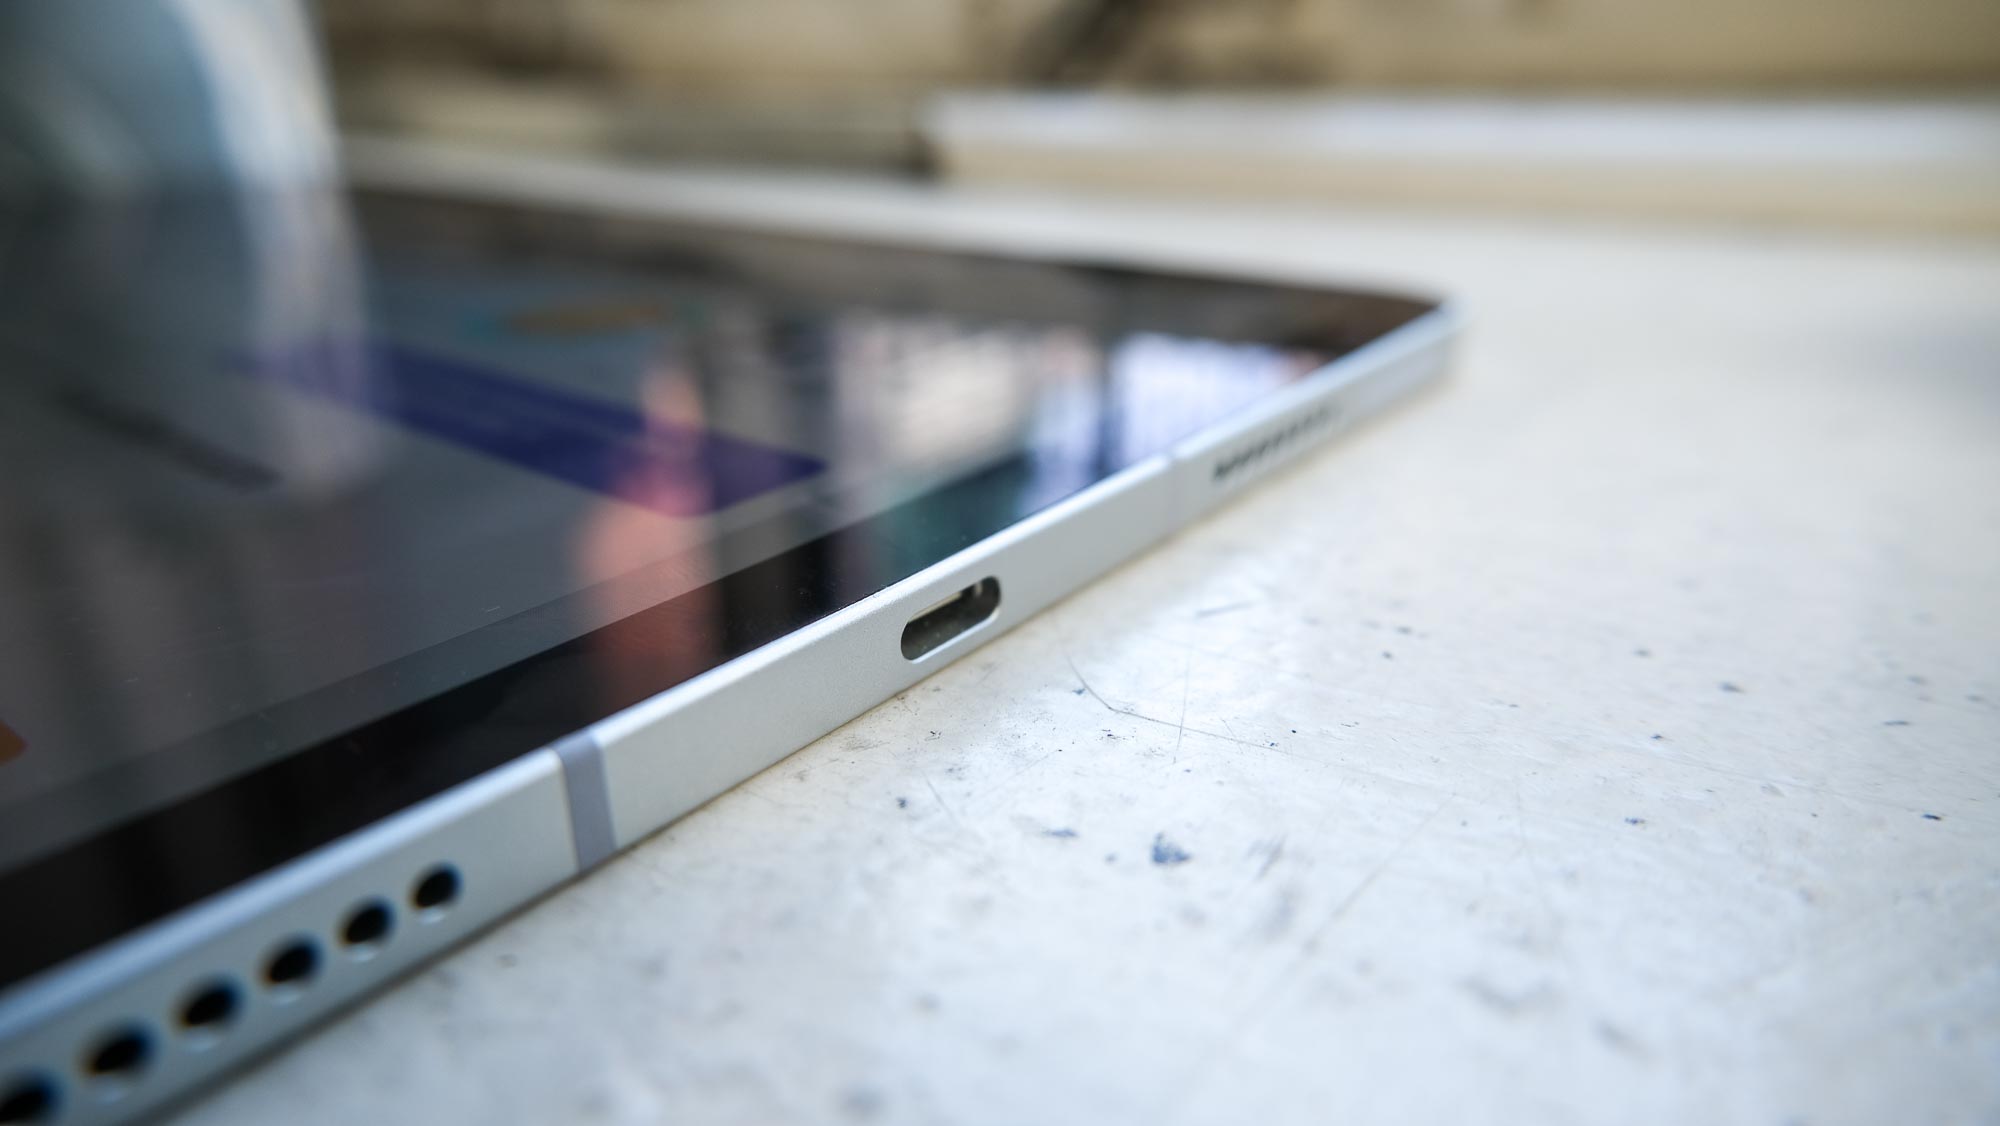 iPad Pro 2021 (11-inch) closeup showing port